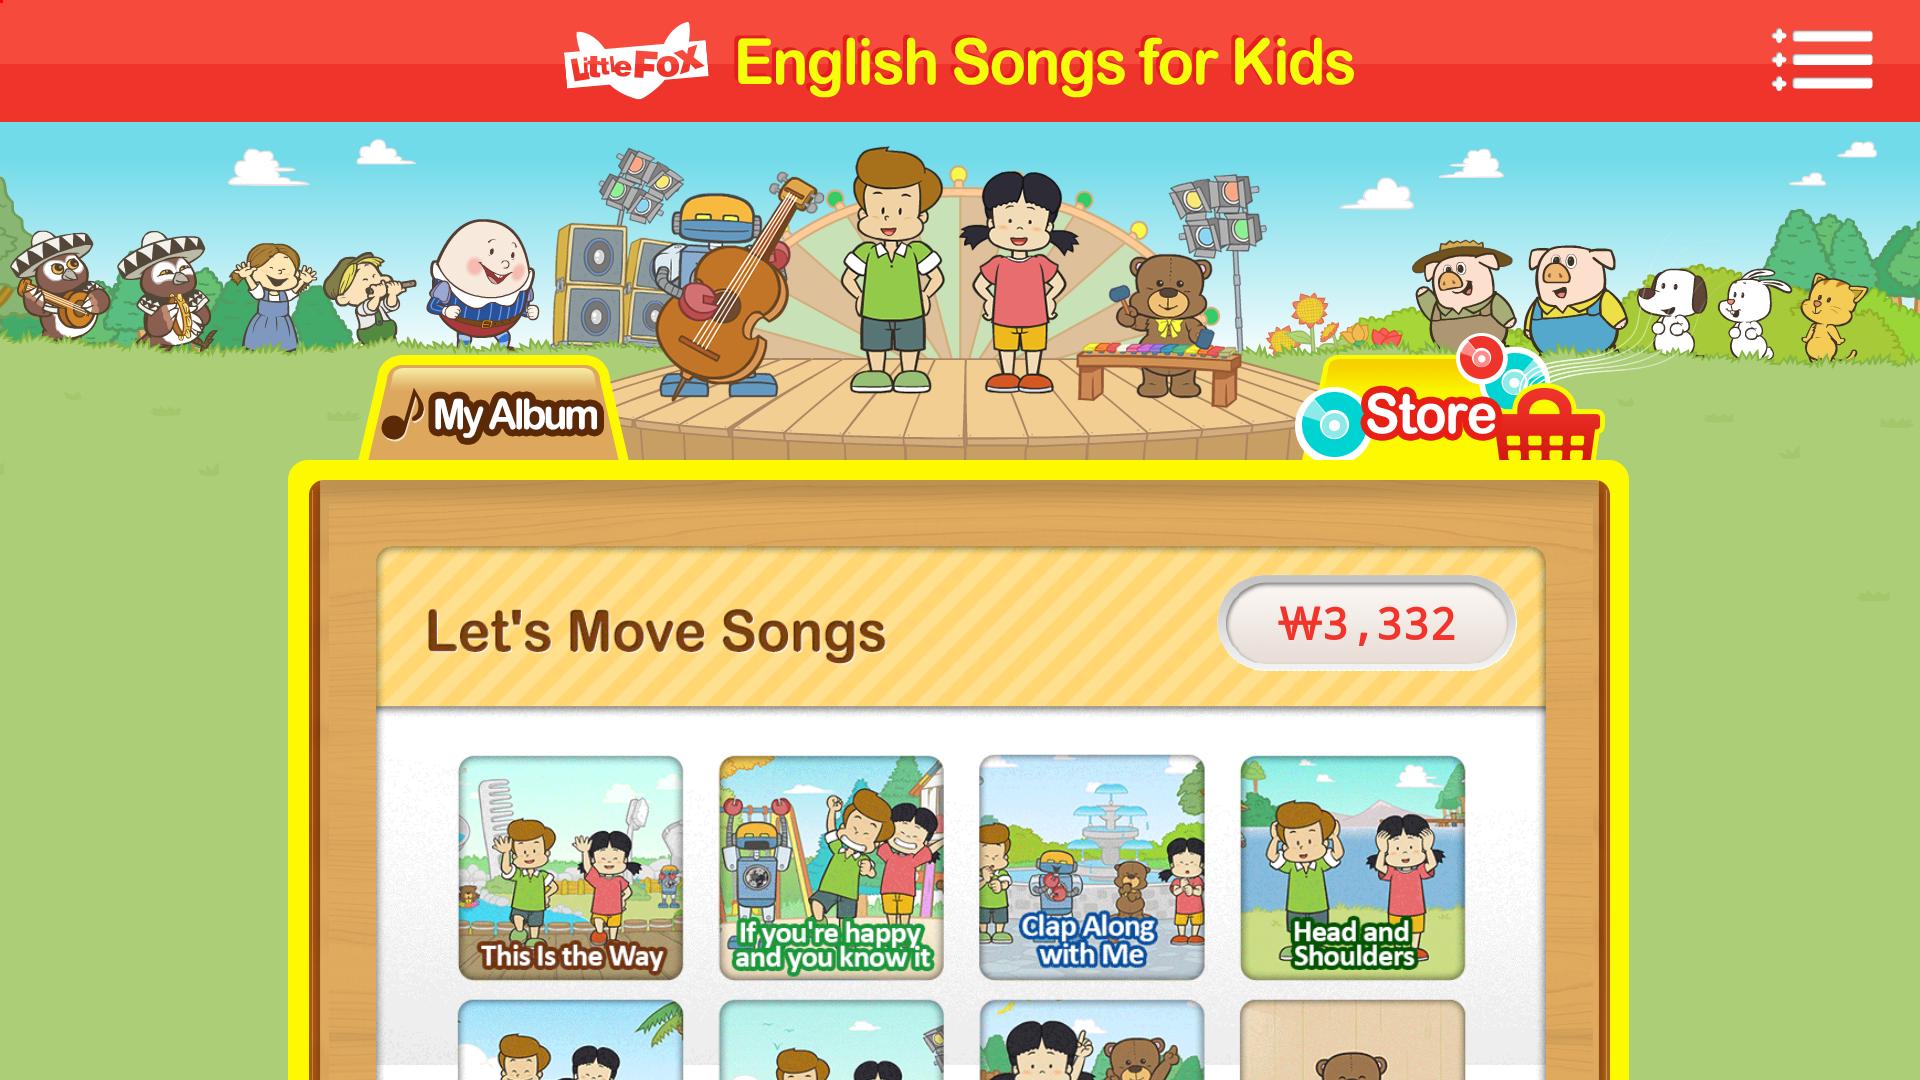 Английская песня kids. English Kids Songs. Little Fox English for Kids. Инглиш Сонг. English for Kids приложение.